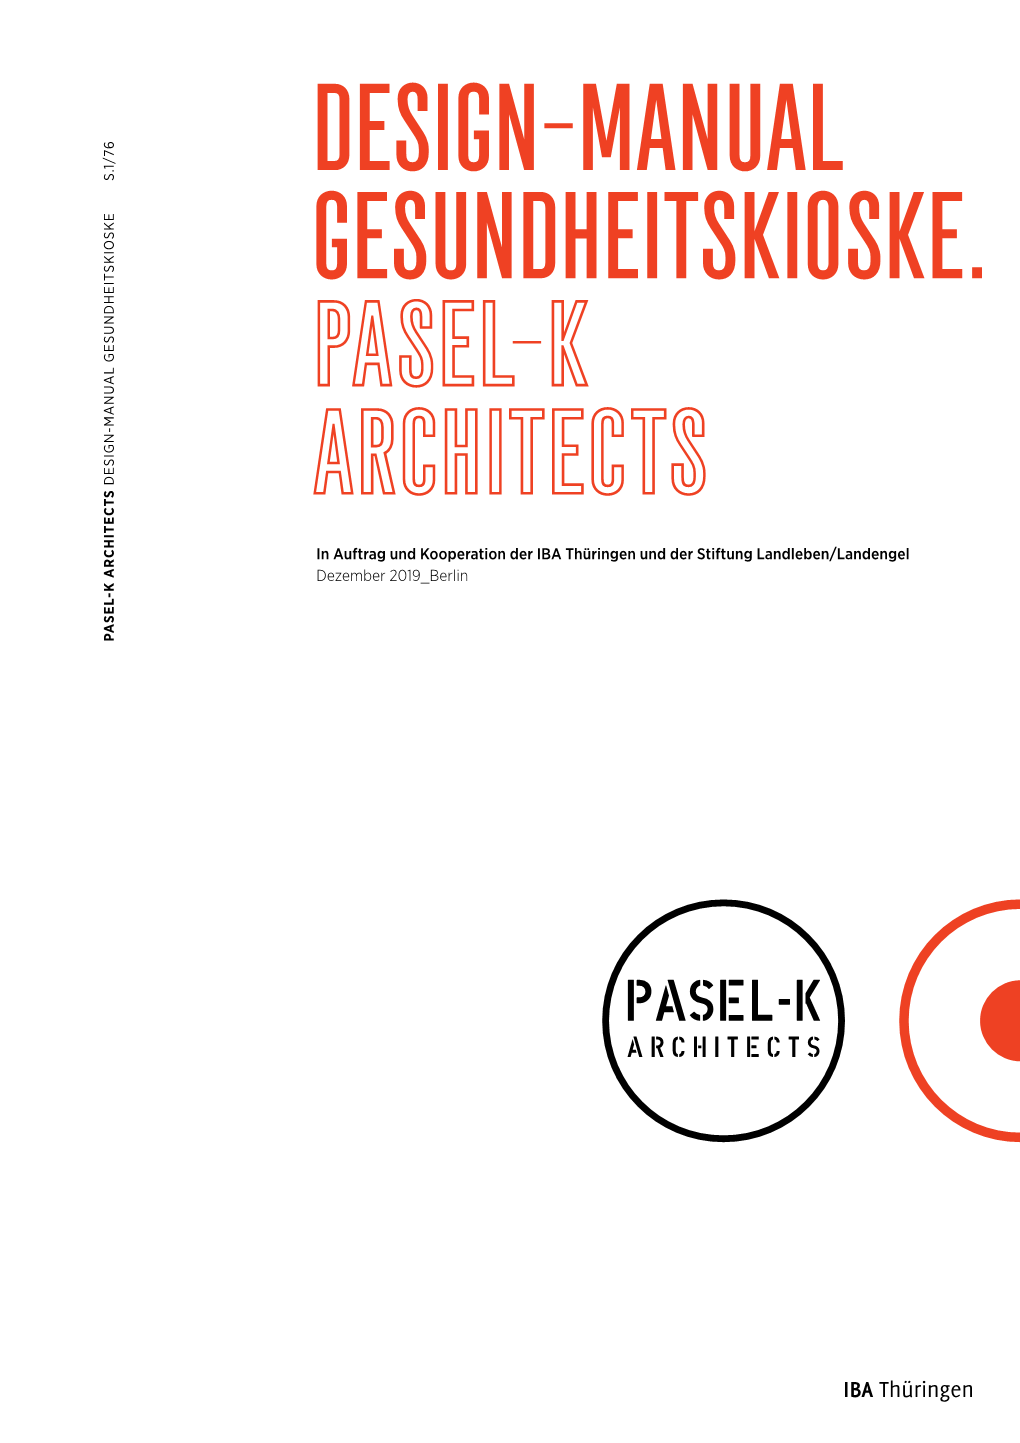 Design-Manual ›Gesundheitskioske‹, Pasel-K Architects